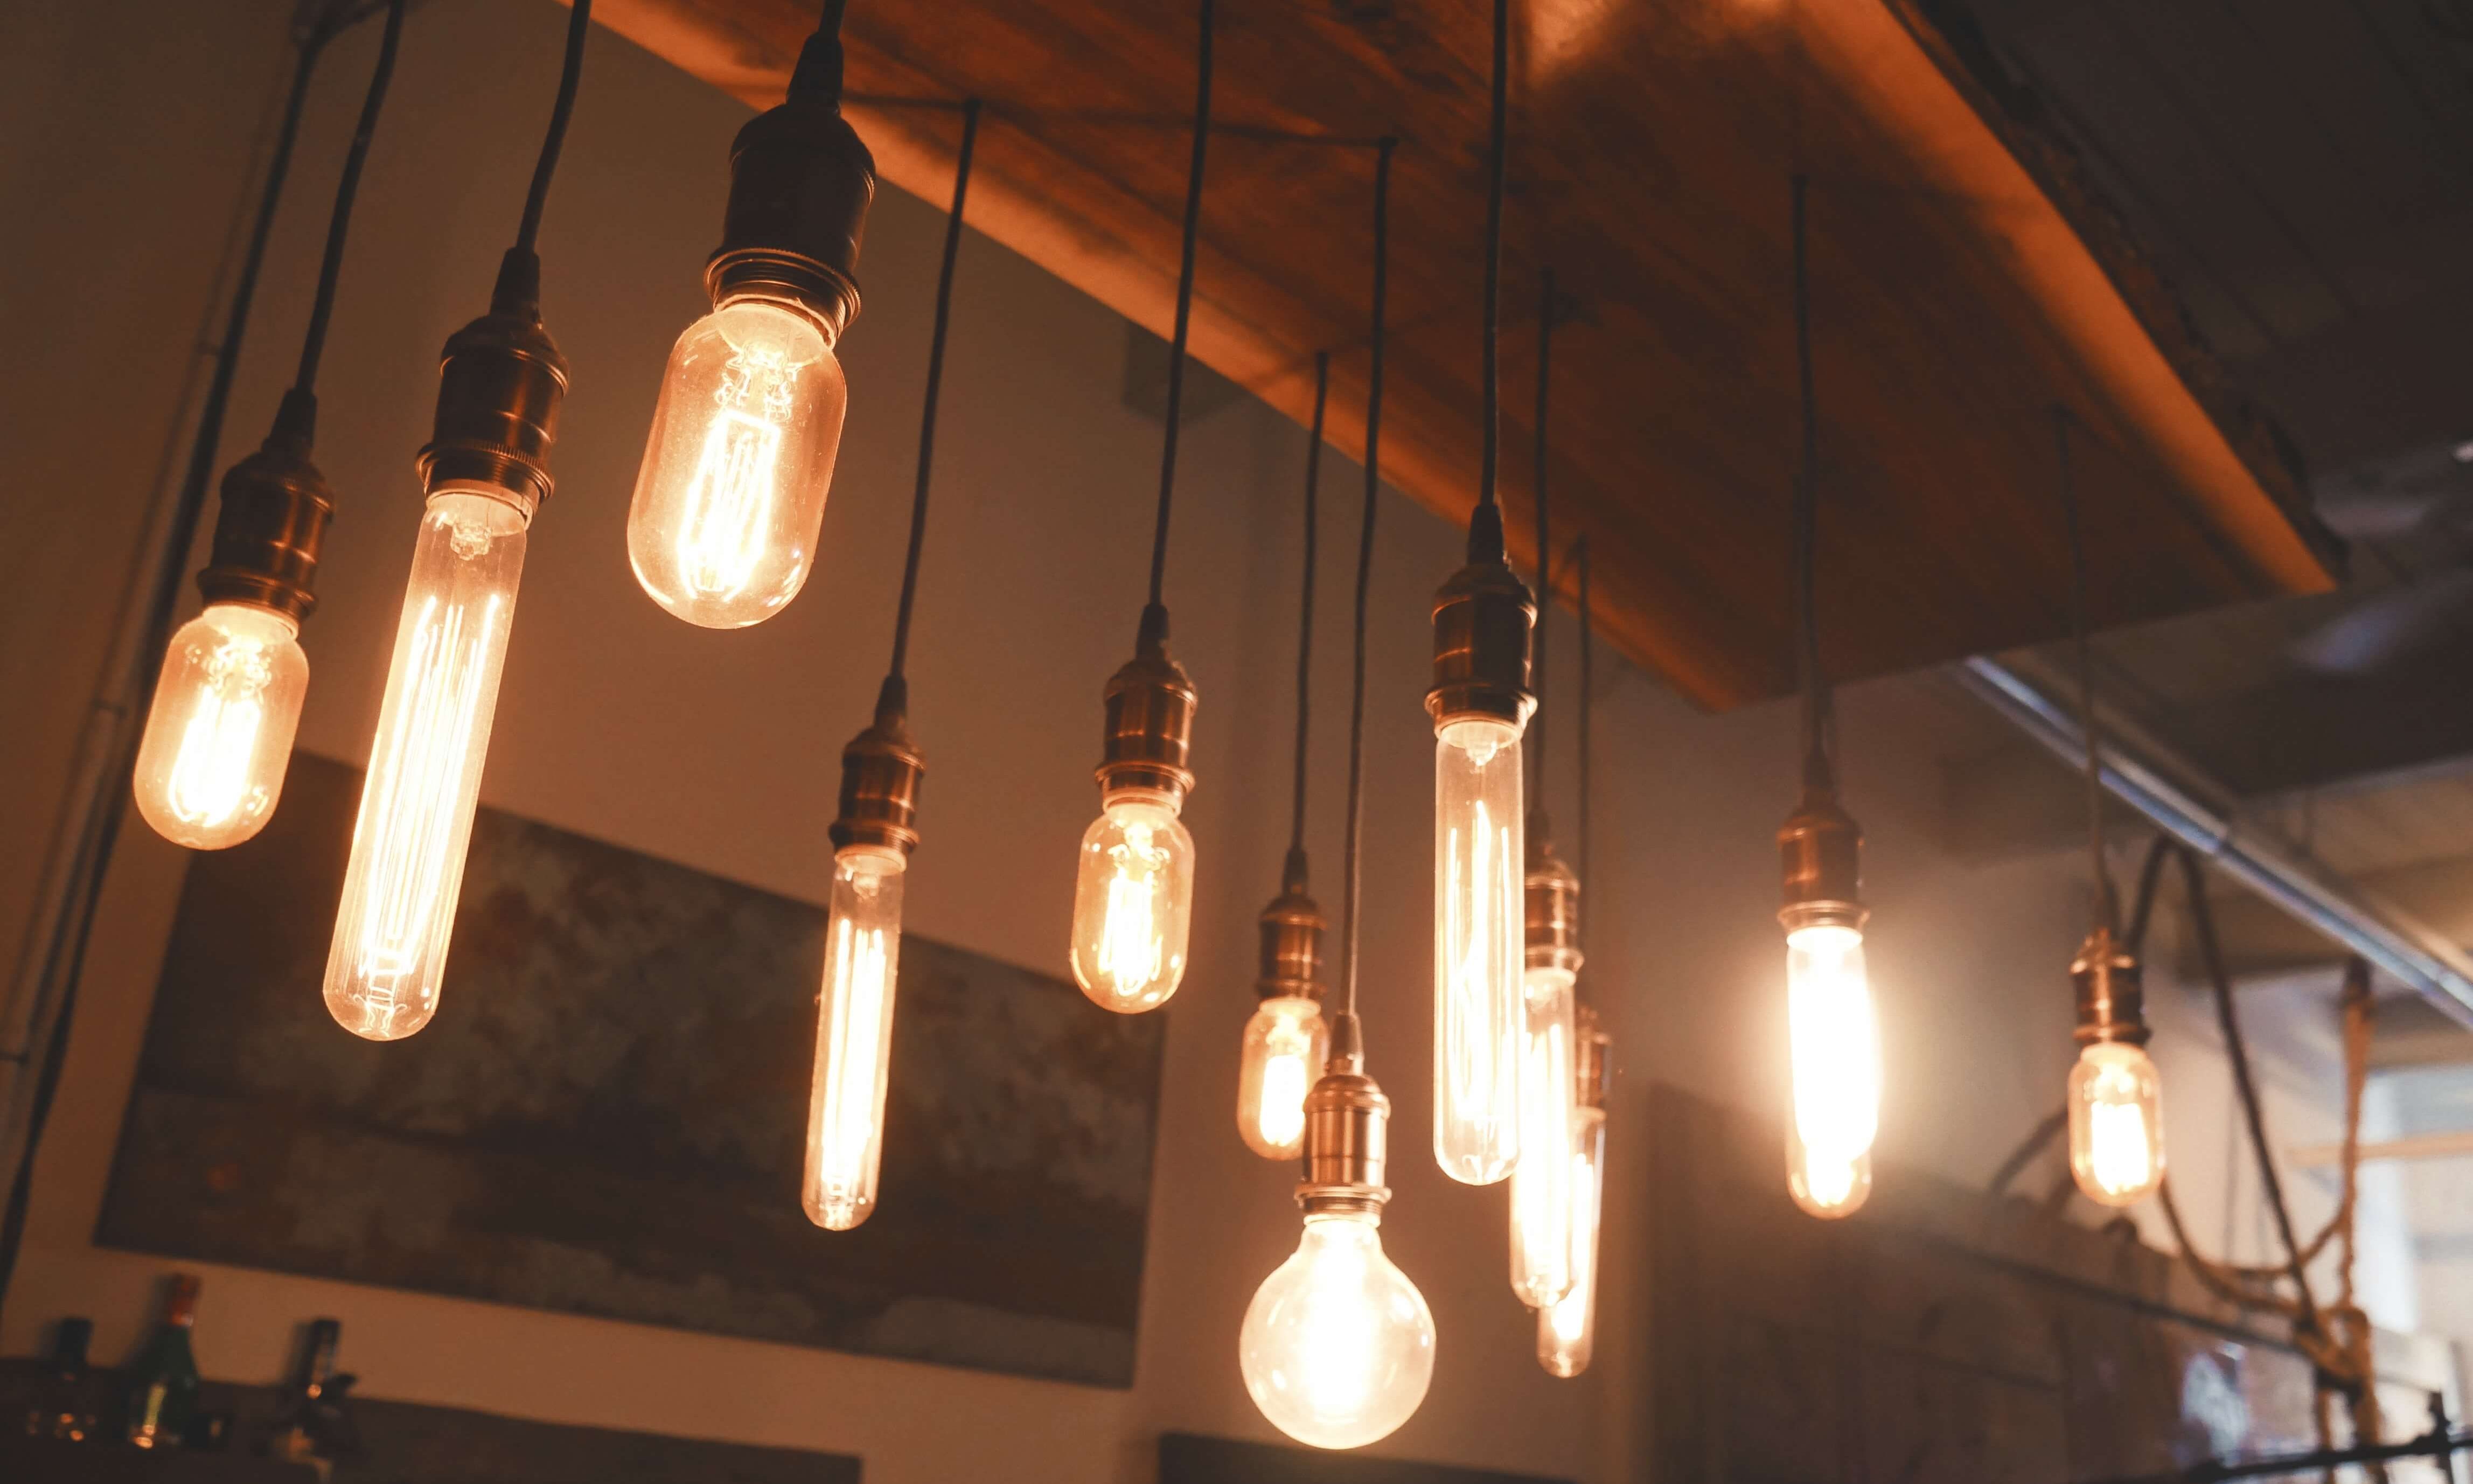 Lighting Design Trend: Carbon Filament (aka Bulbs)